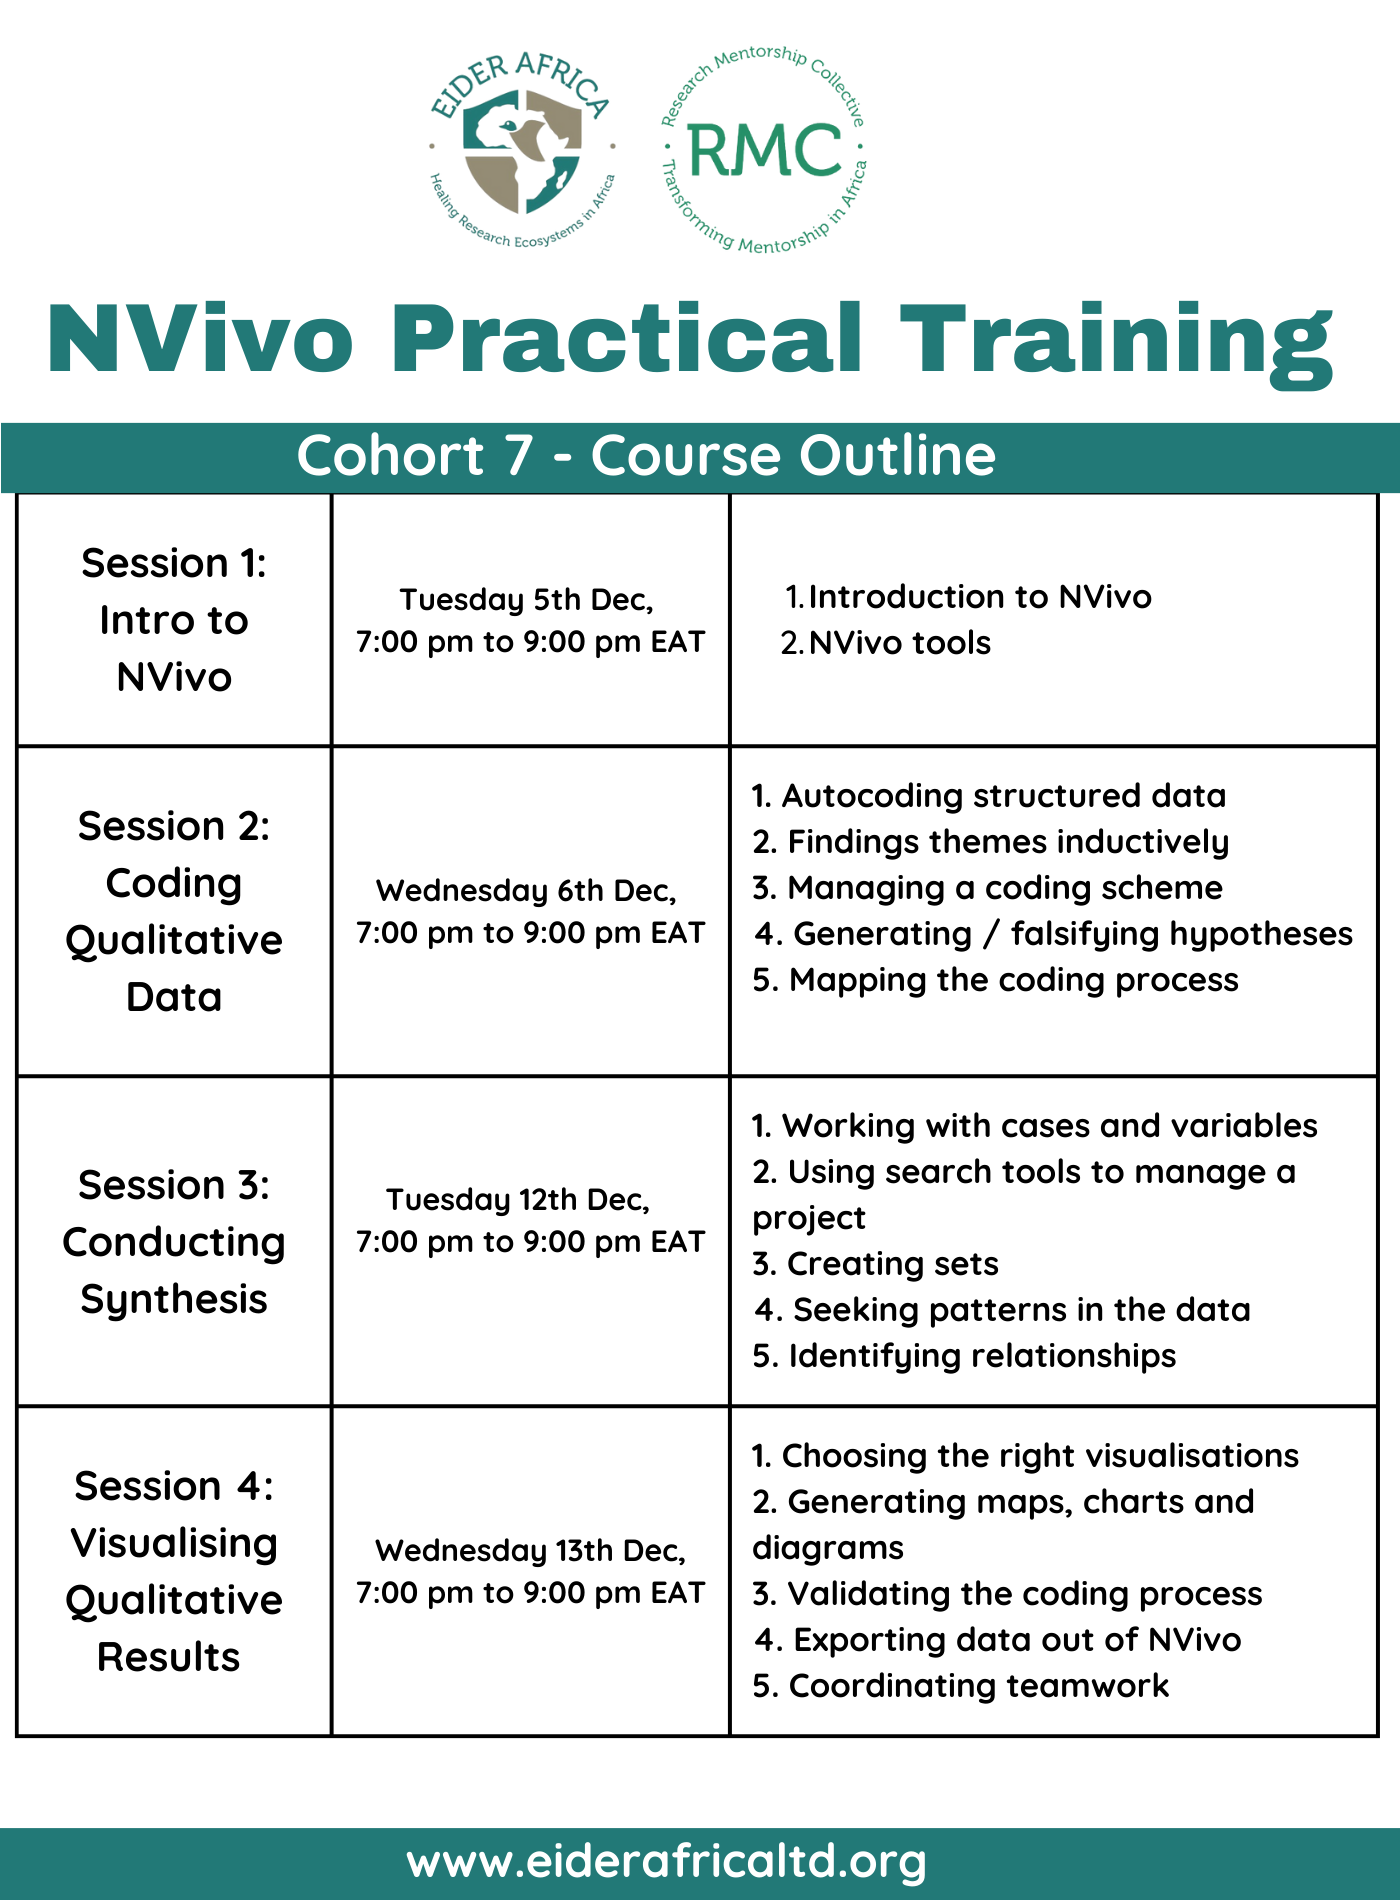 NVivo Cohort 7 Course Outline